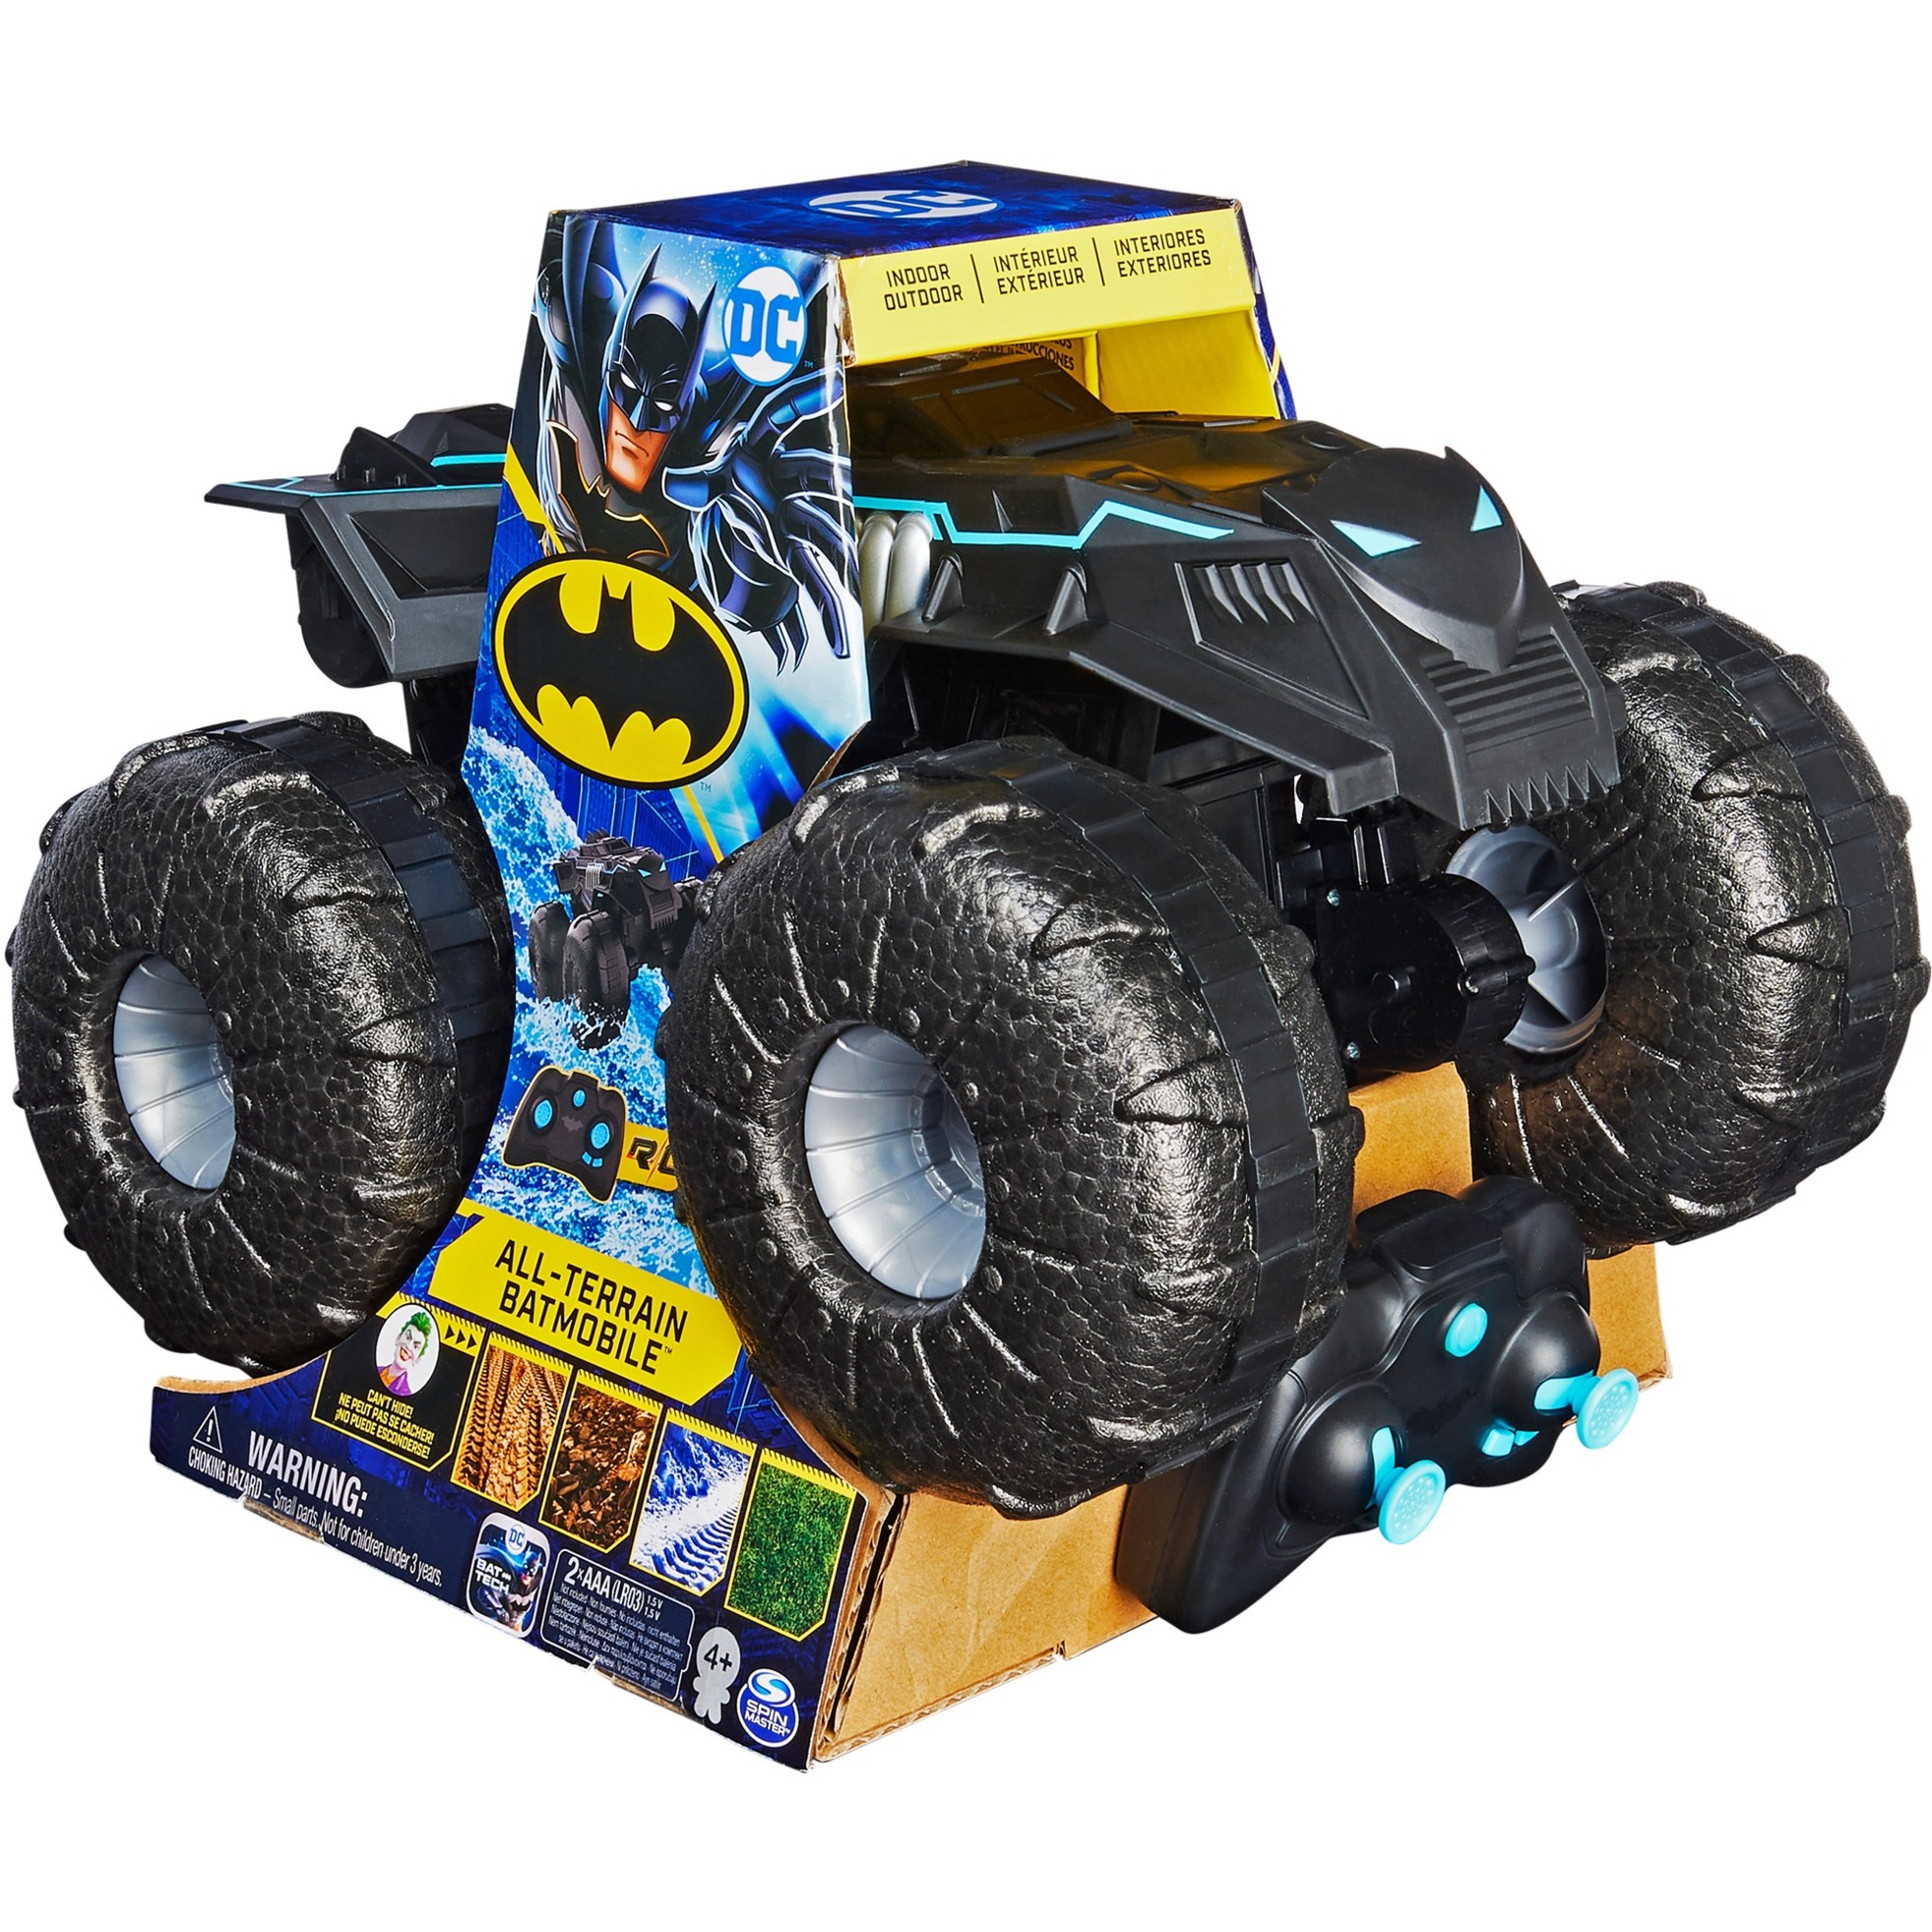 Image of Alternate - Batman All-Terrain Batmobile, RC online einkaufen bei Alternate